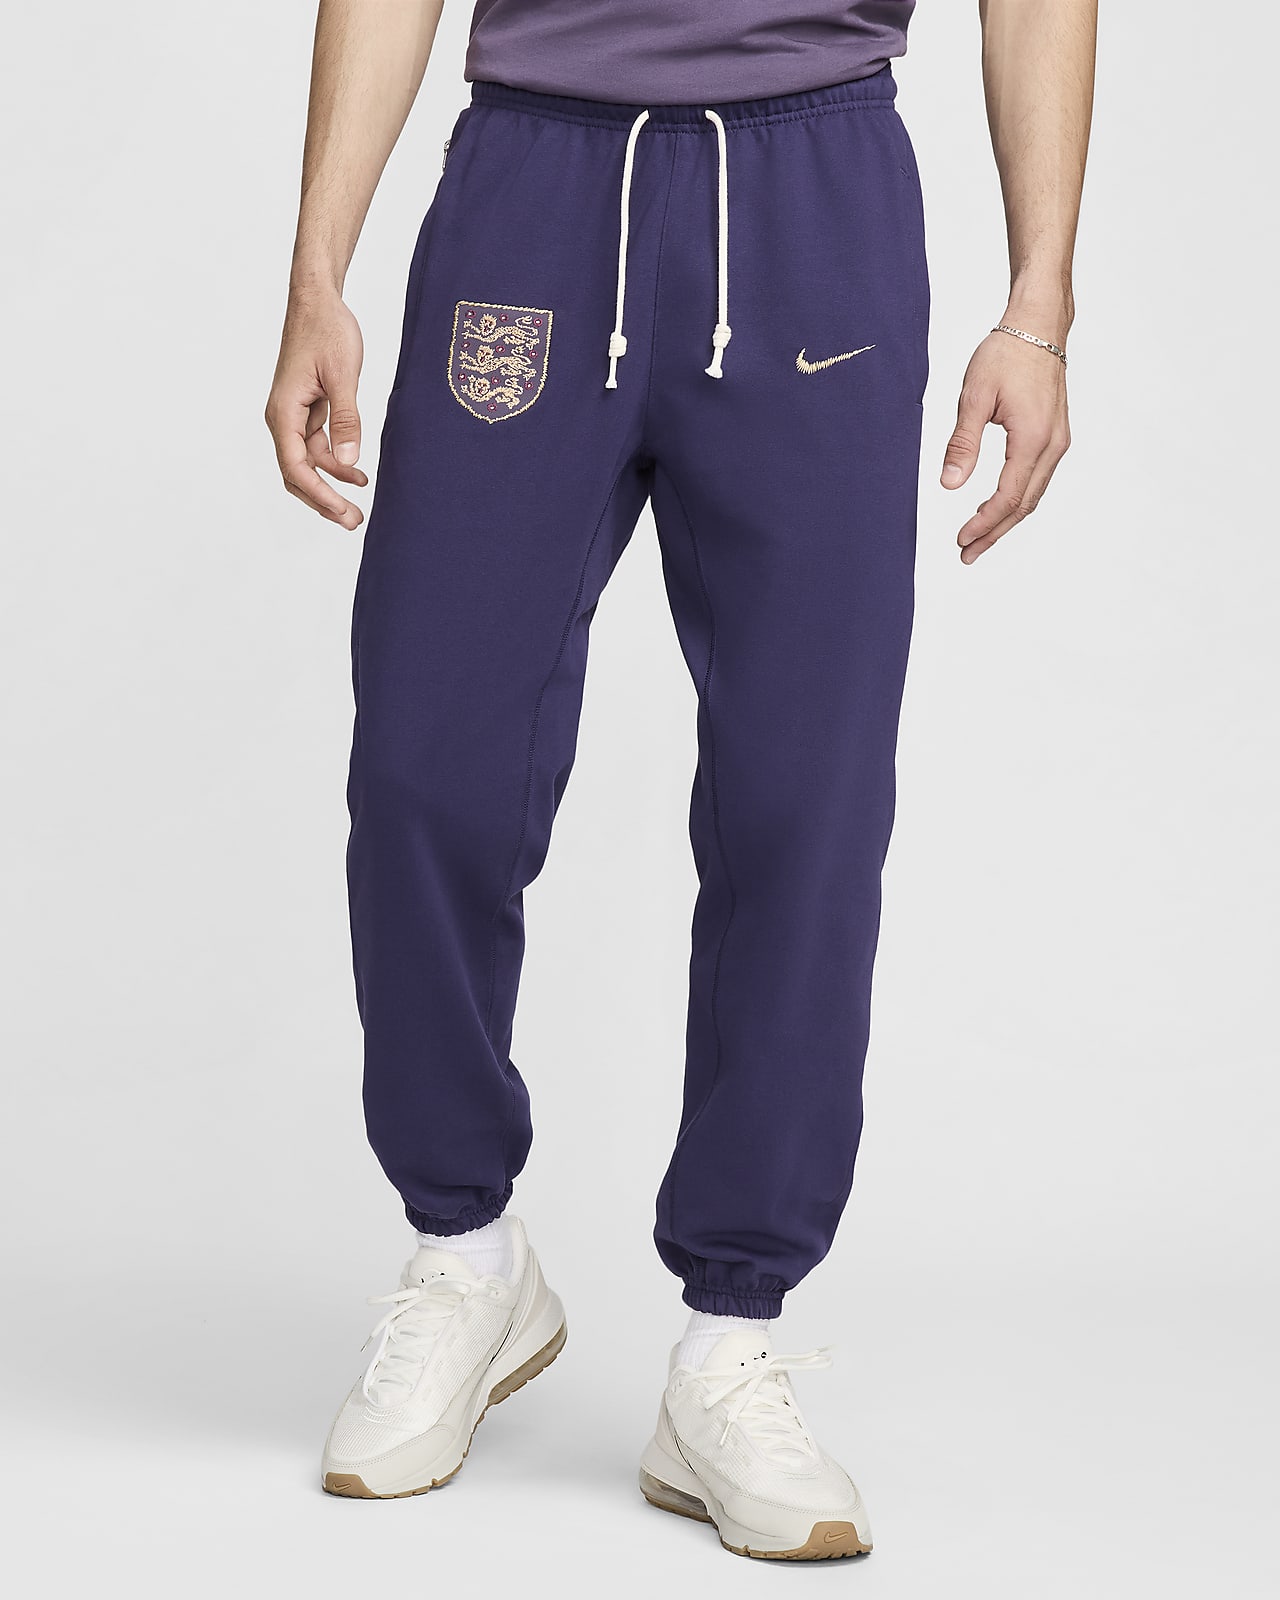 Pantalon de foot Nike Standard Issue Angleterre pour homme